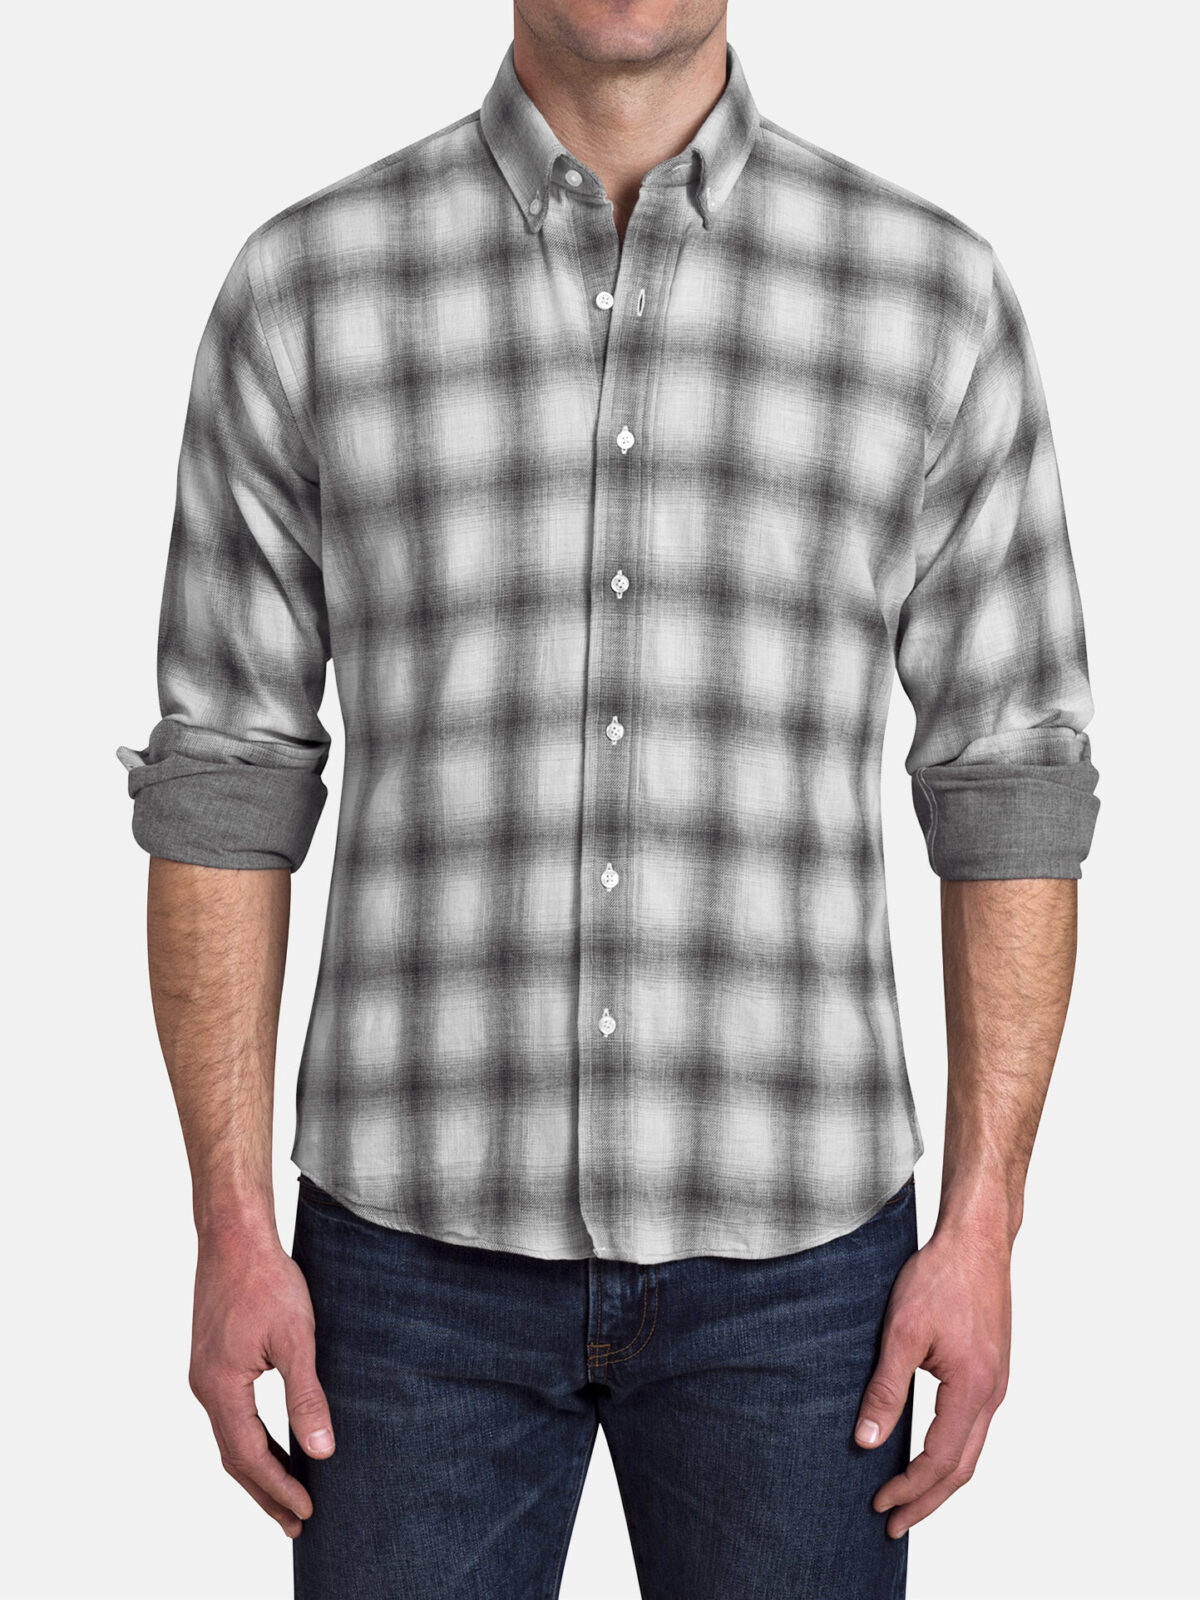 Light Grey Melange Ombre Plaid Double Cloth Custom Dress Shirt Shirt by  Proper Cloth